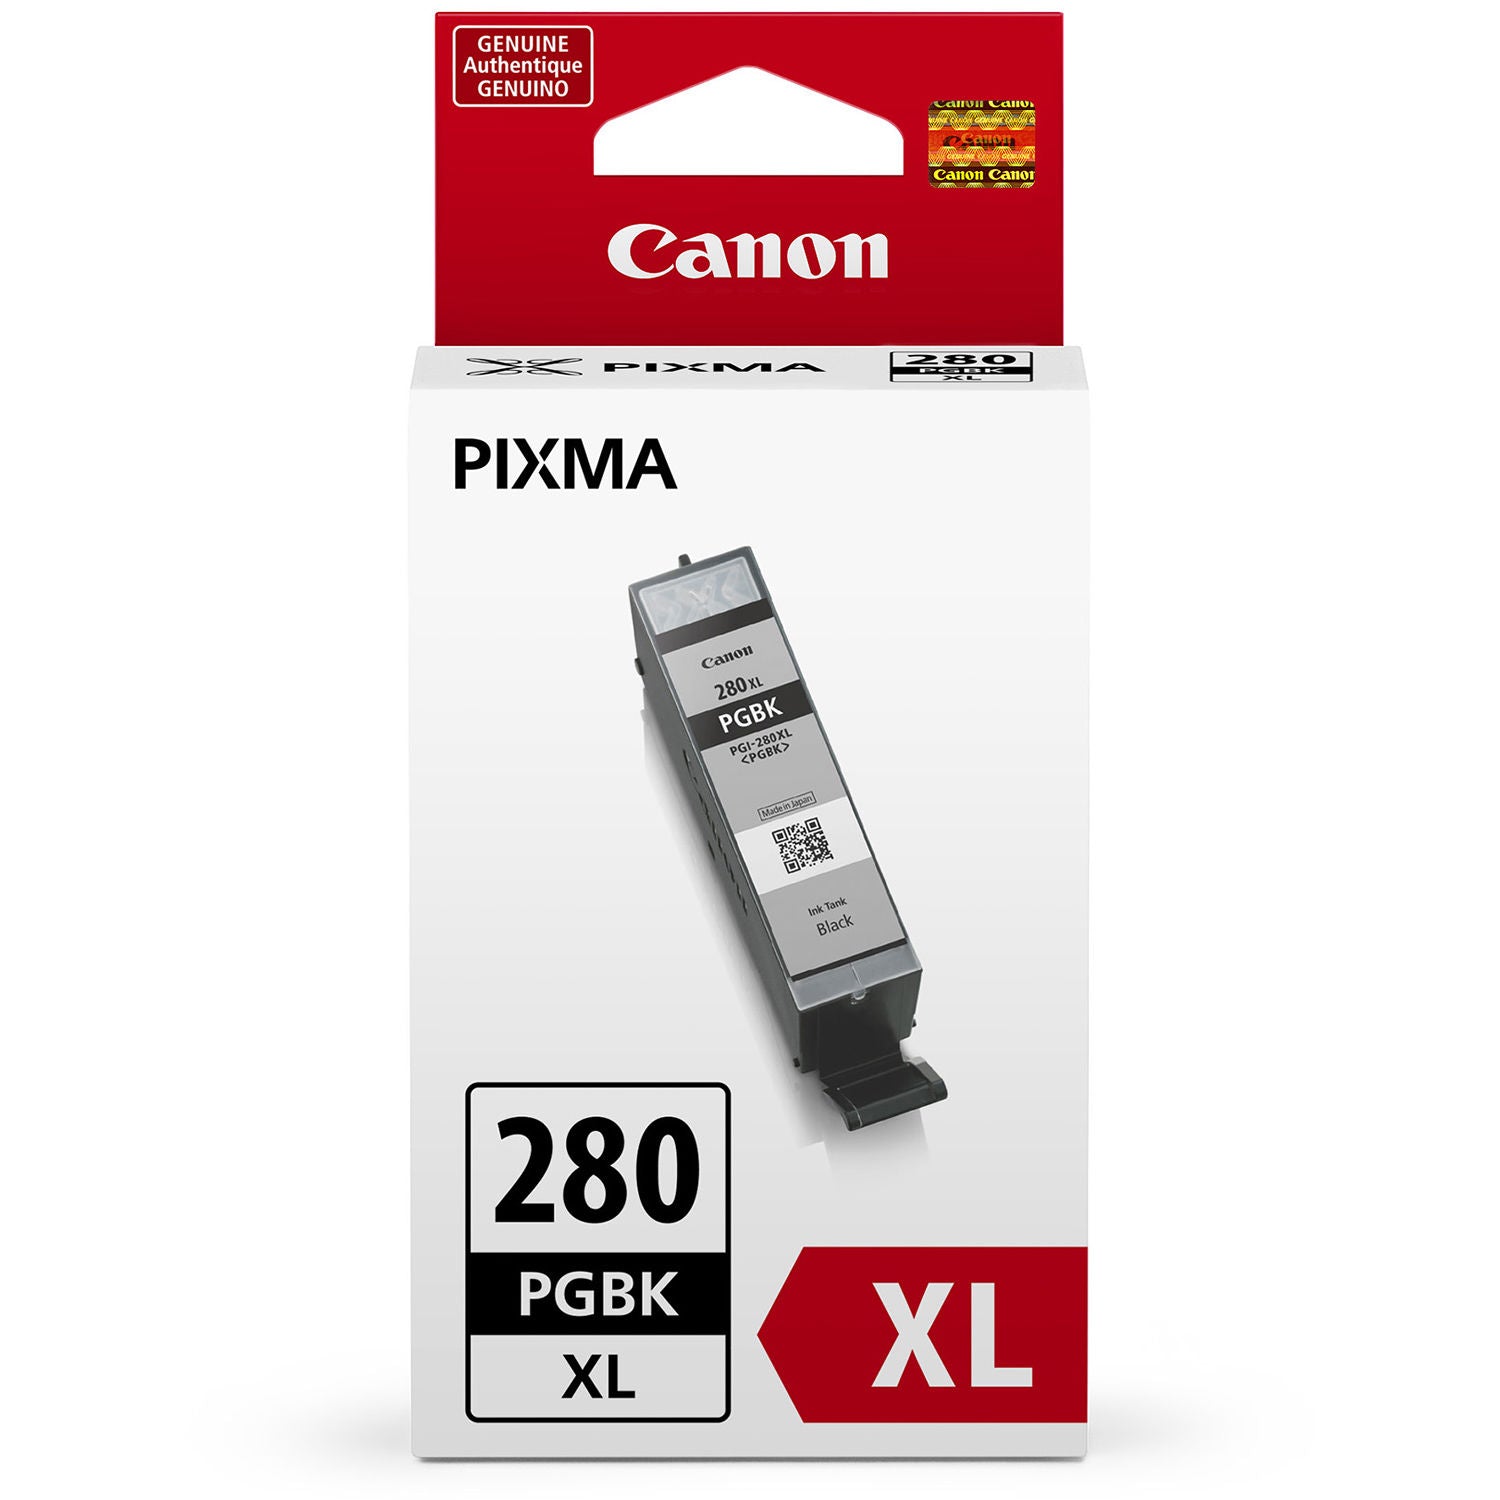 Absolute Toner Original Canon Genuine OEM PGI-280XL Black High Yield Ink Cartridge (2021C001) Original Canon Cartridges